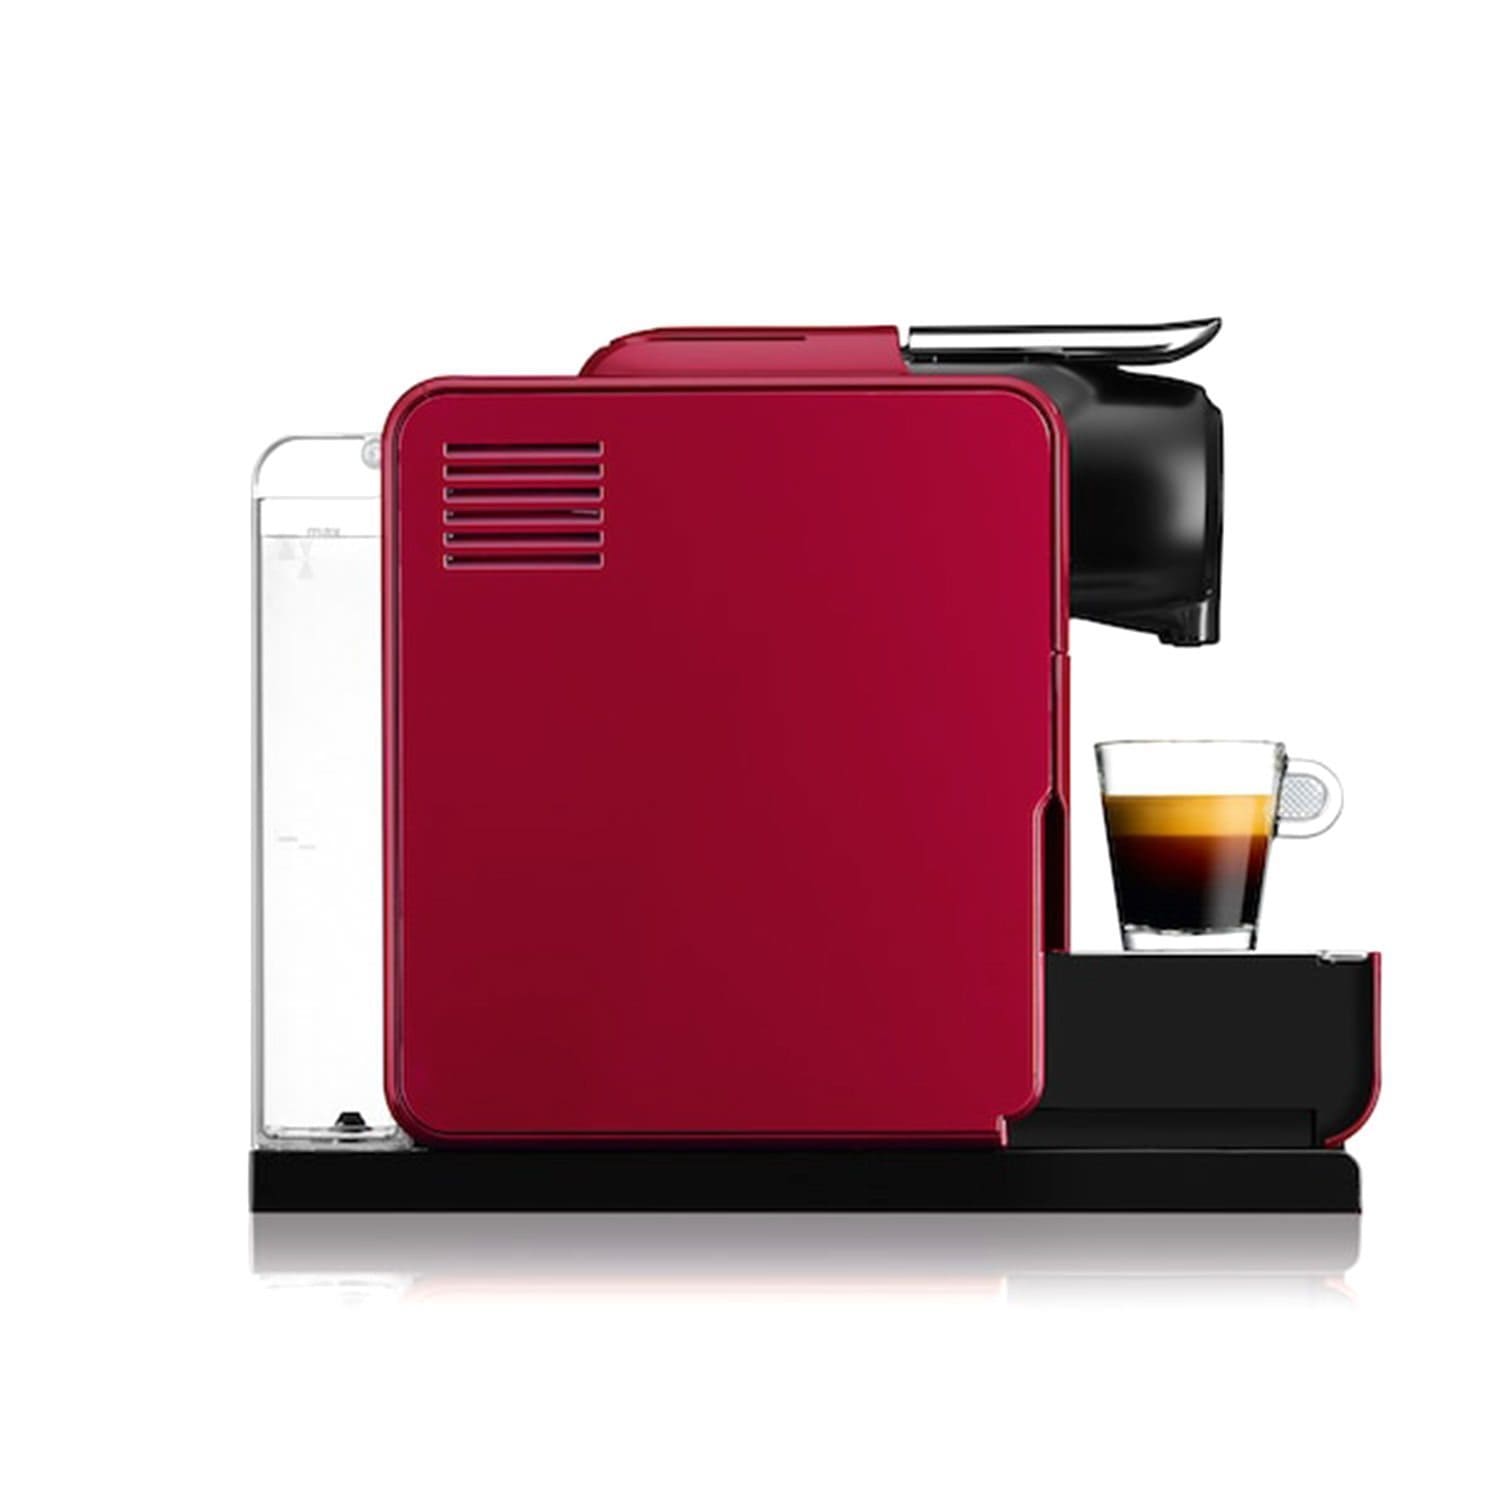 Nespresso ماكينة صنع القهوة لاتيسيما تاتش - احمر - F511-ME-RE-NE - جاشنمال هوم